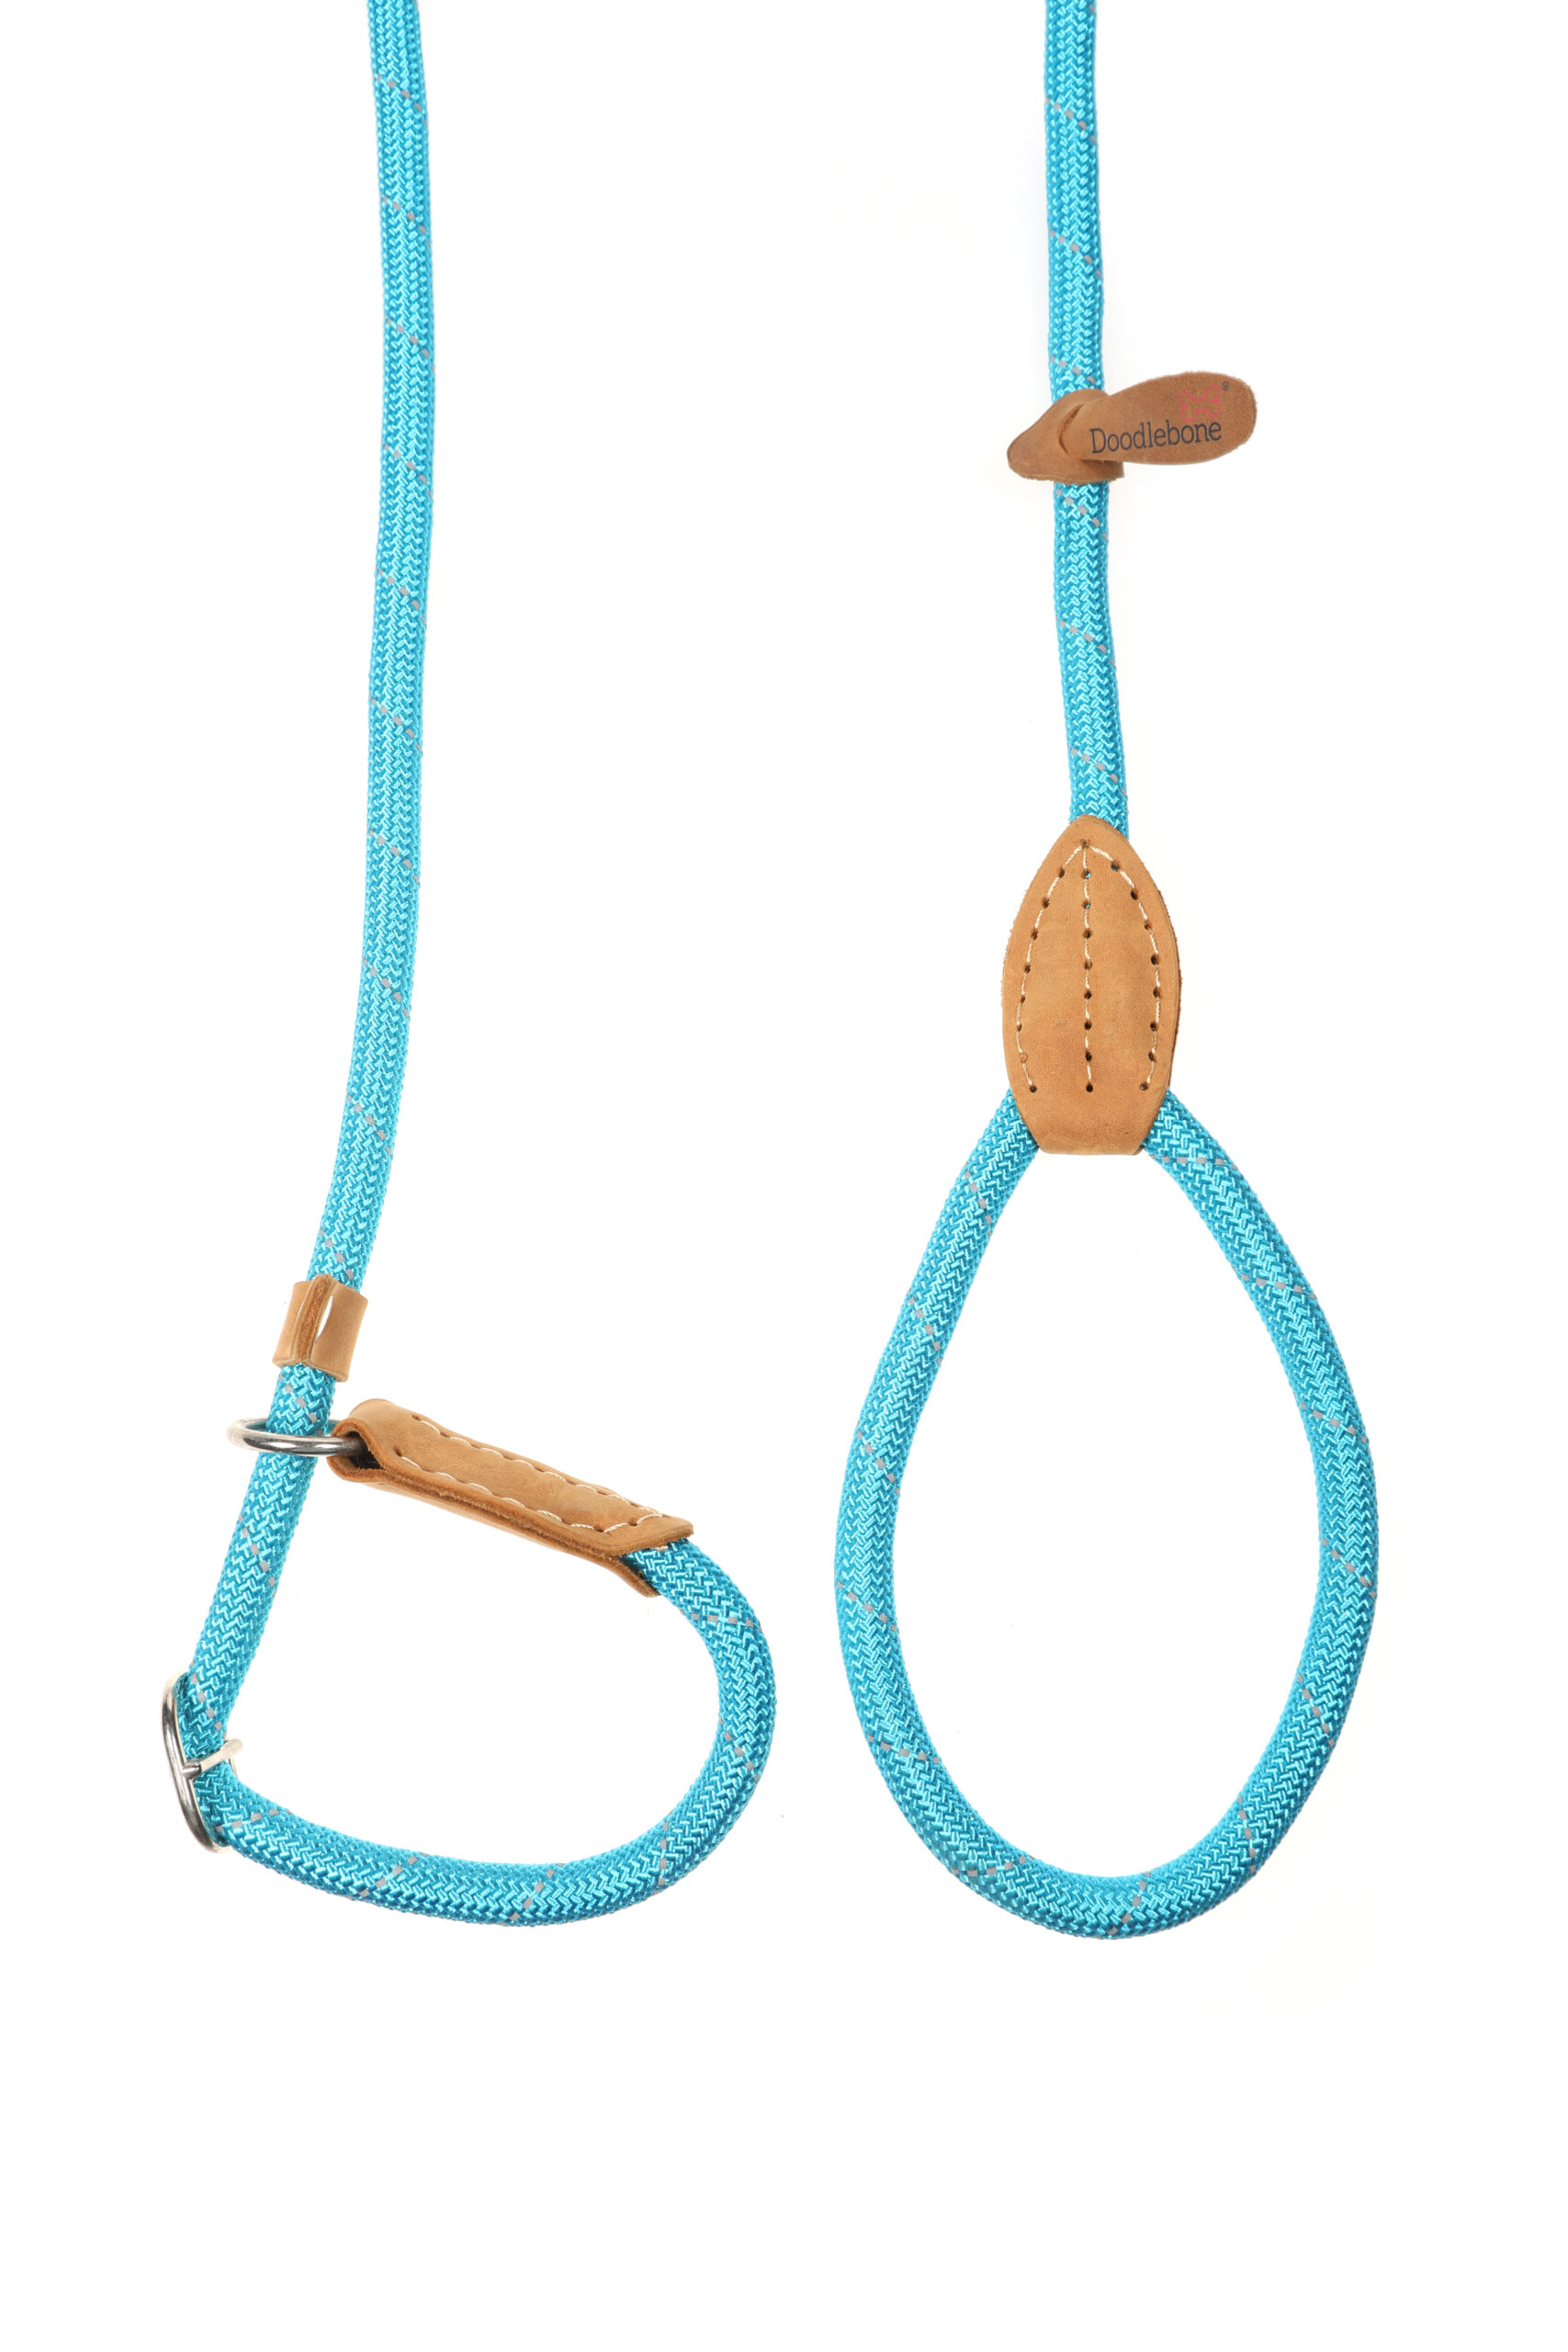 Doodlebone Originals Aqua Blue Rope Dog Slip Lead